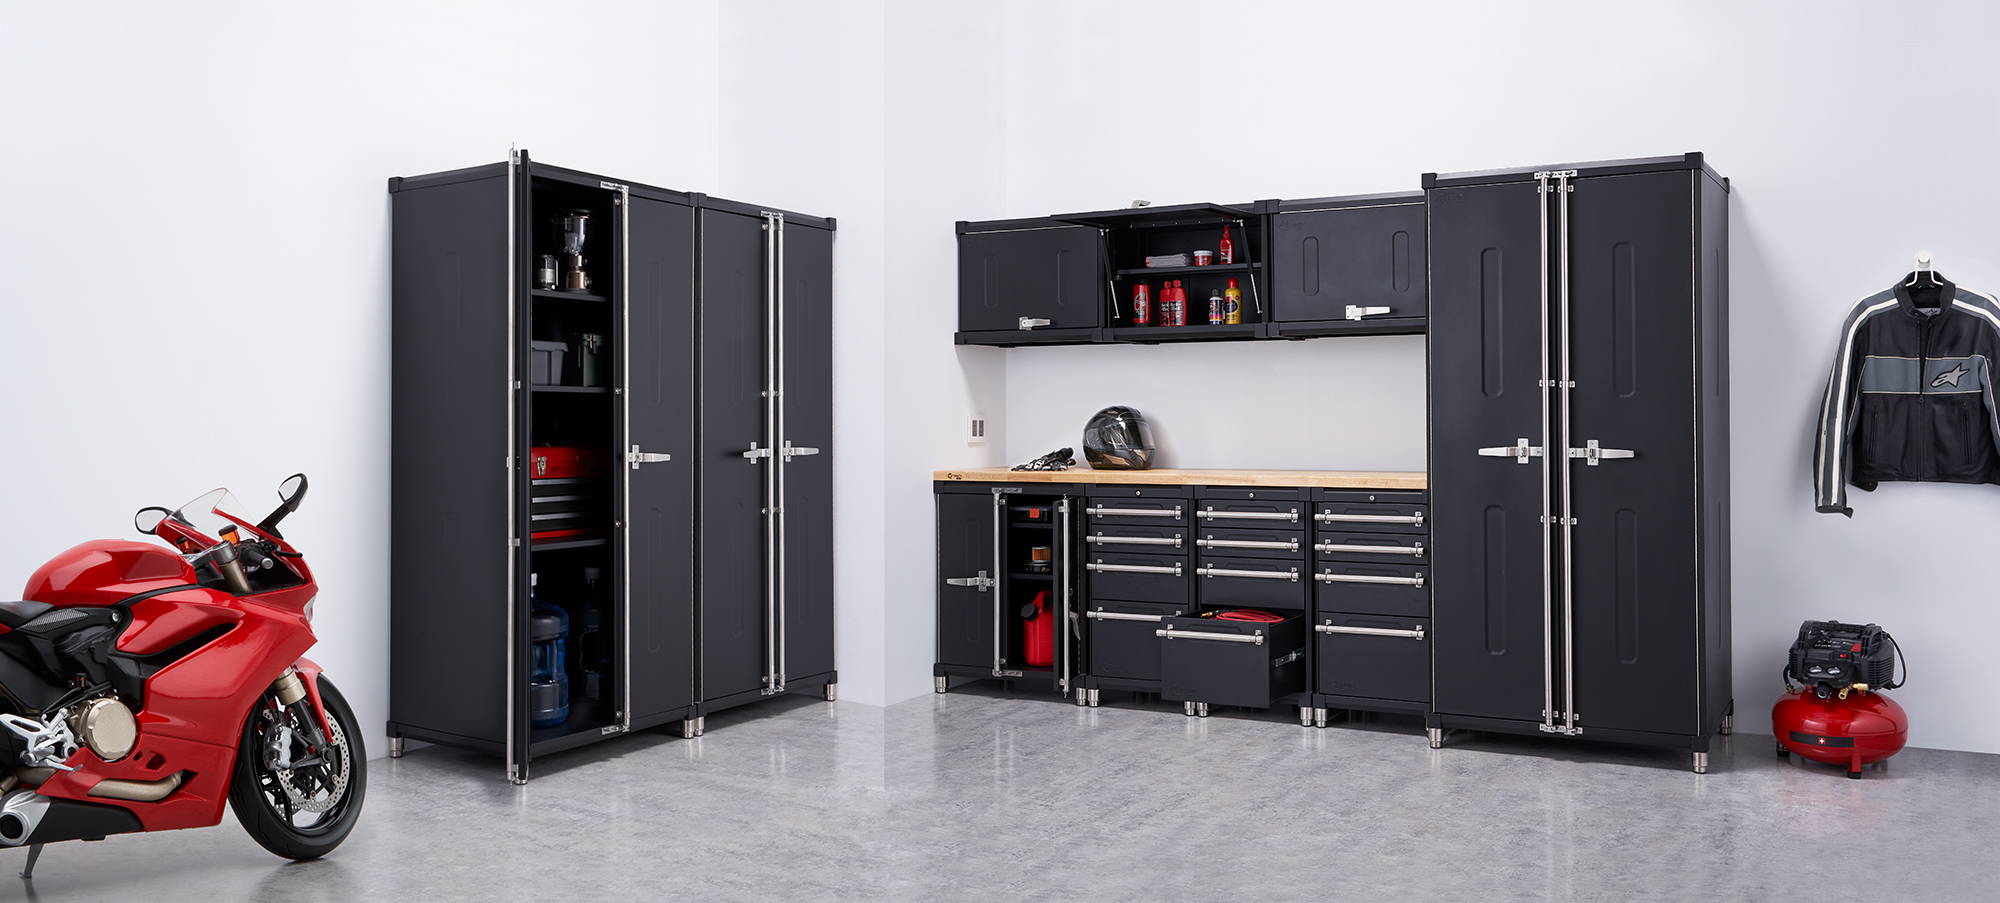 11 piece TRINITY pro garage cabinet set